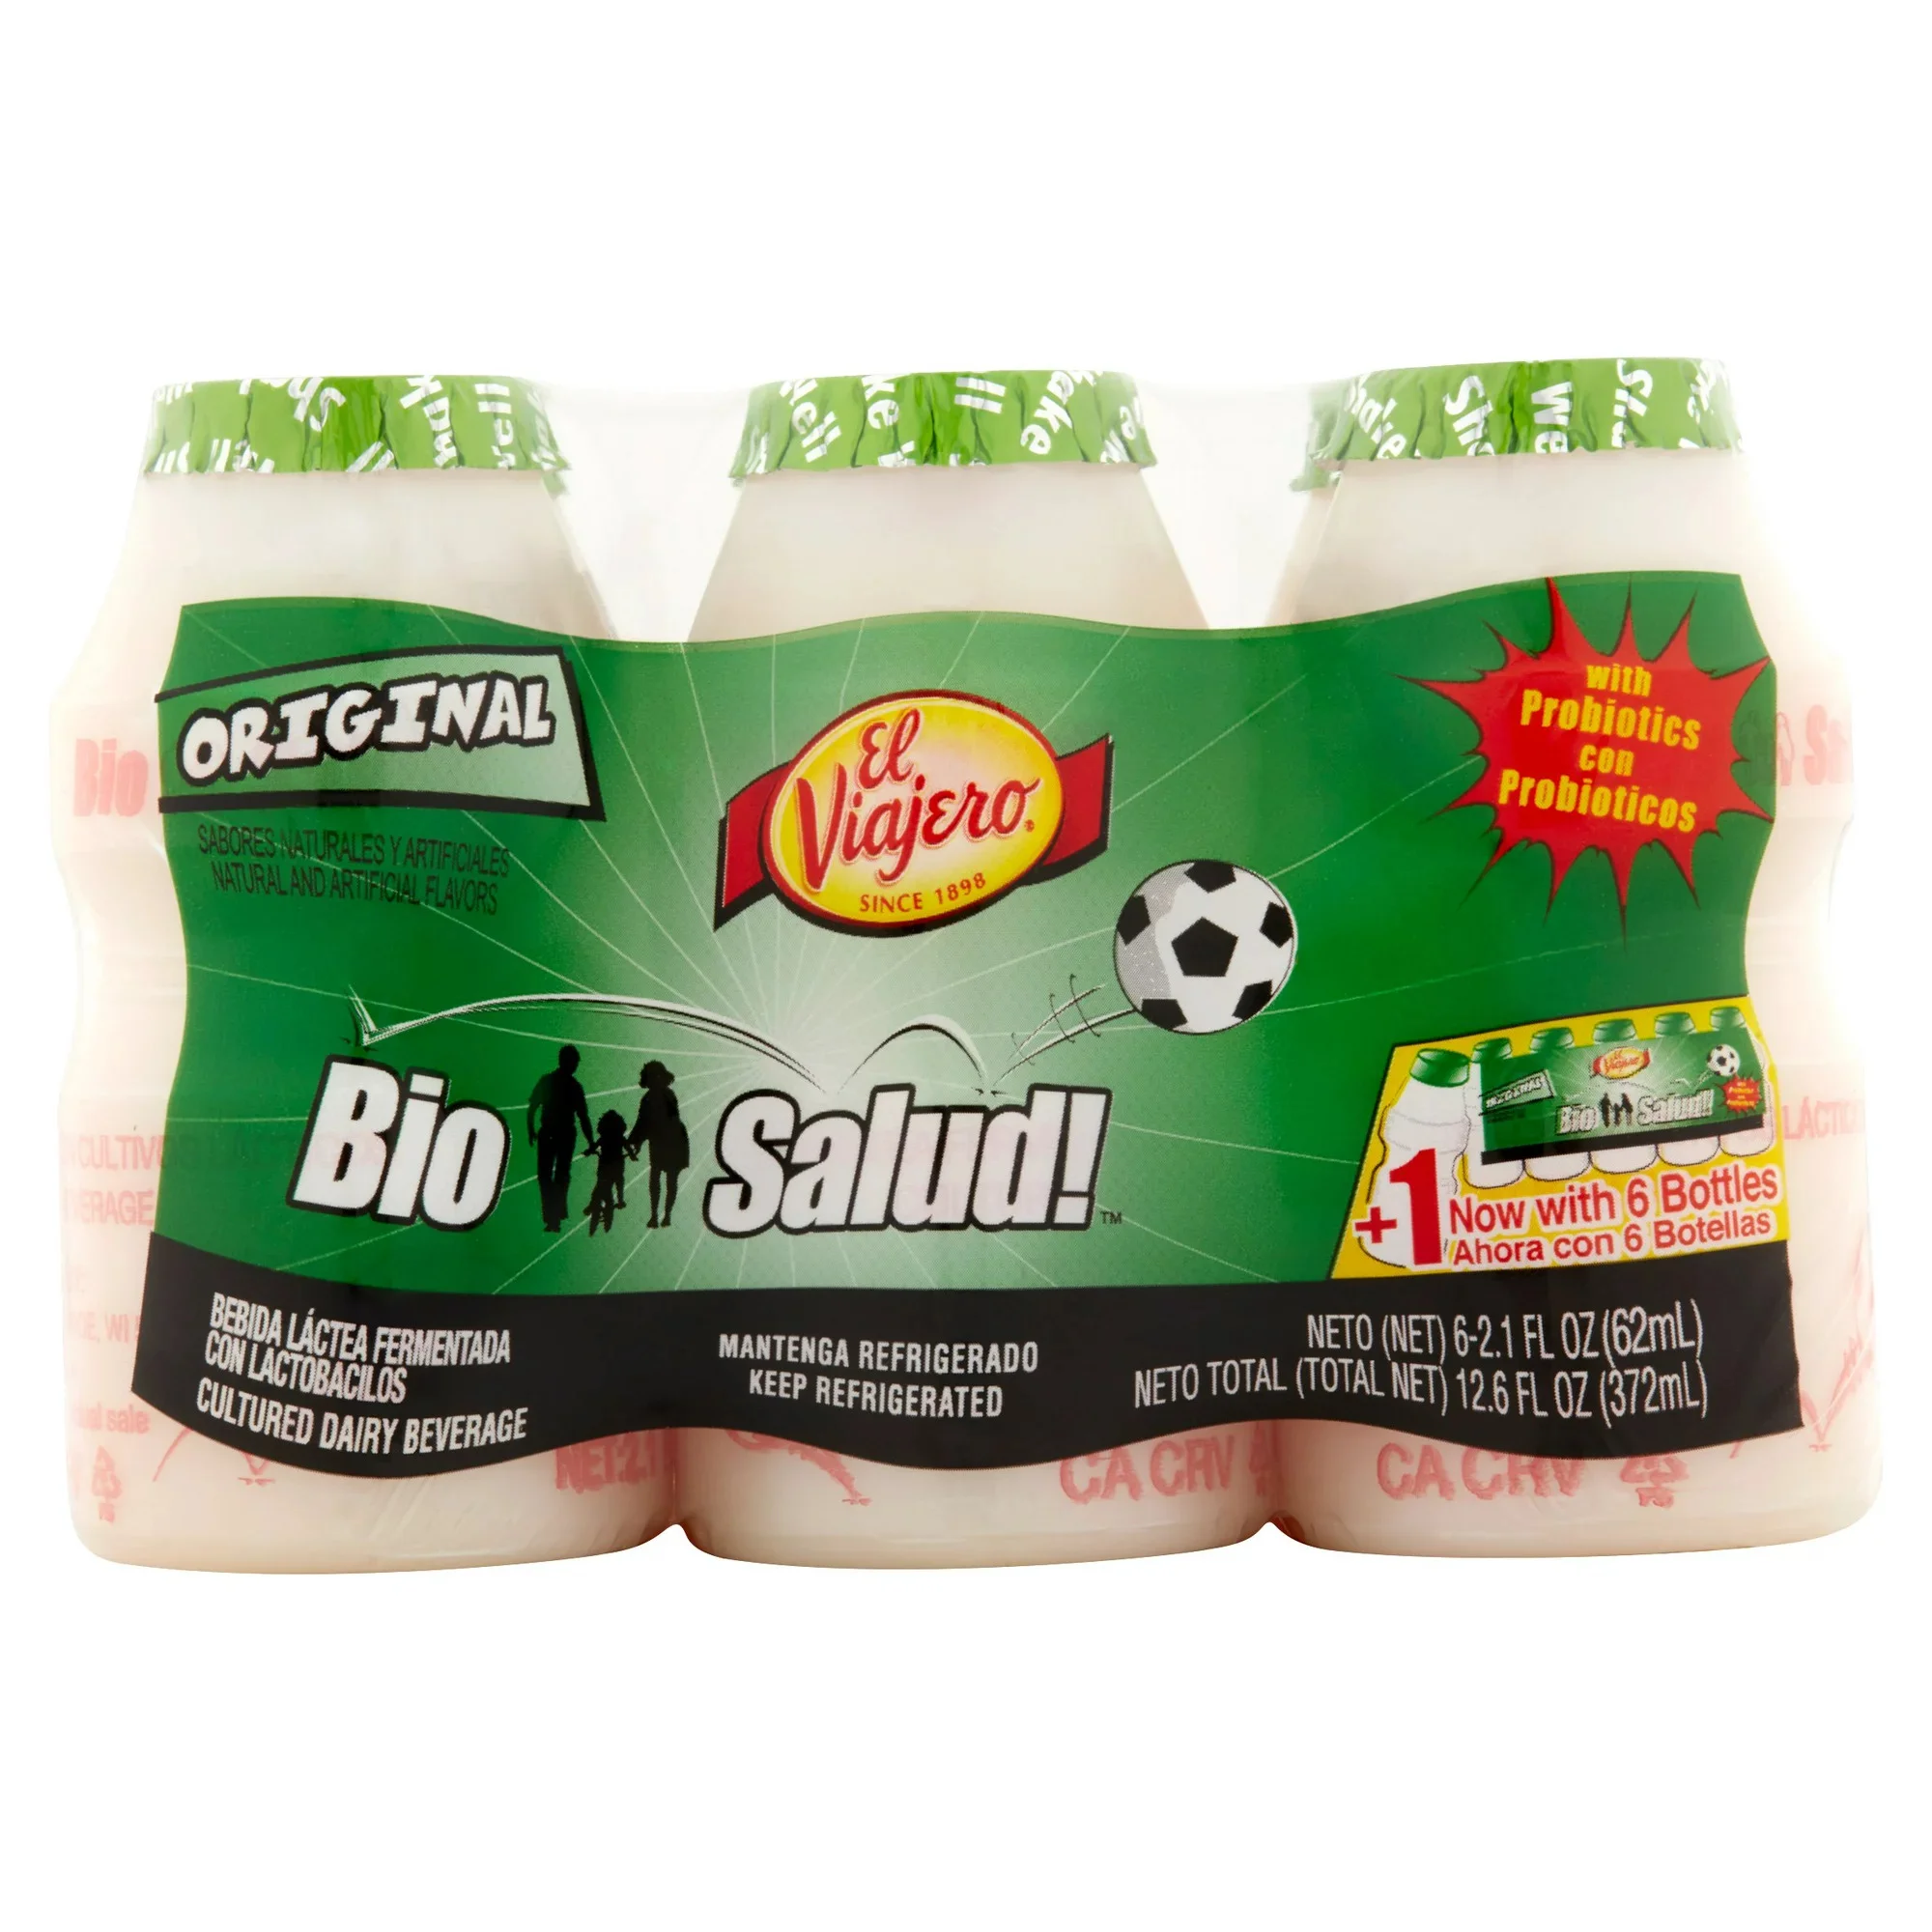 Read more about the article Bio Salud! Original Flavor Cultured Dairy Beverage (Walmart)